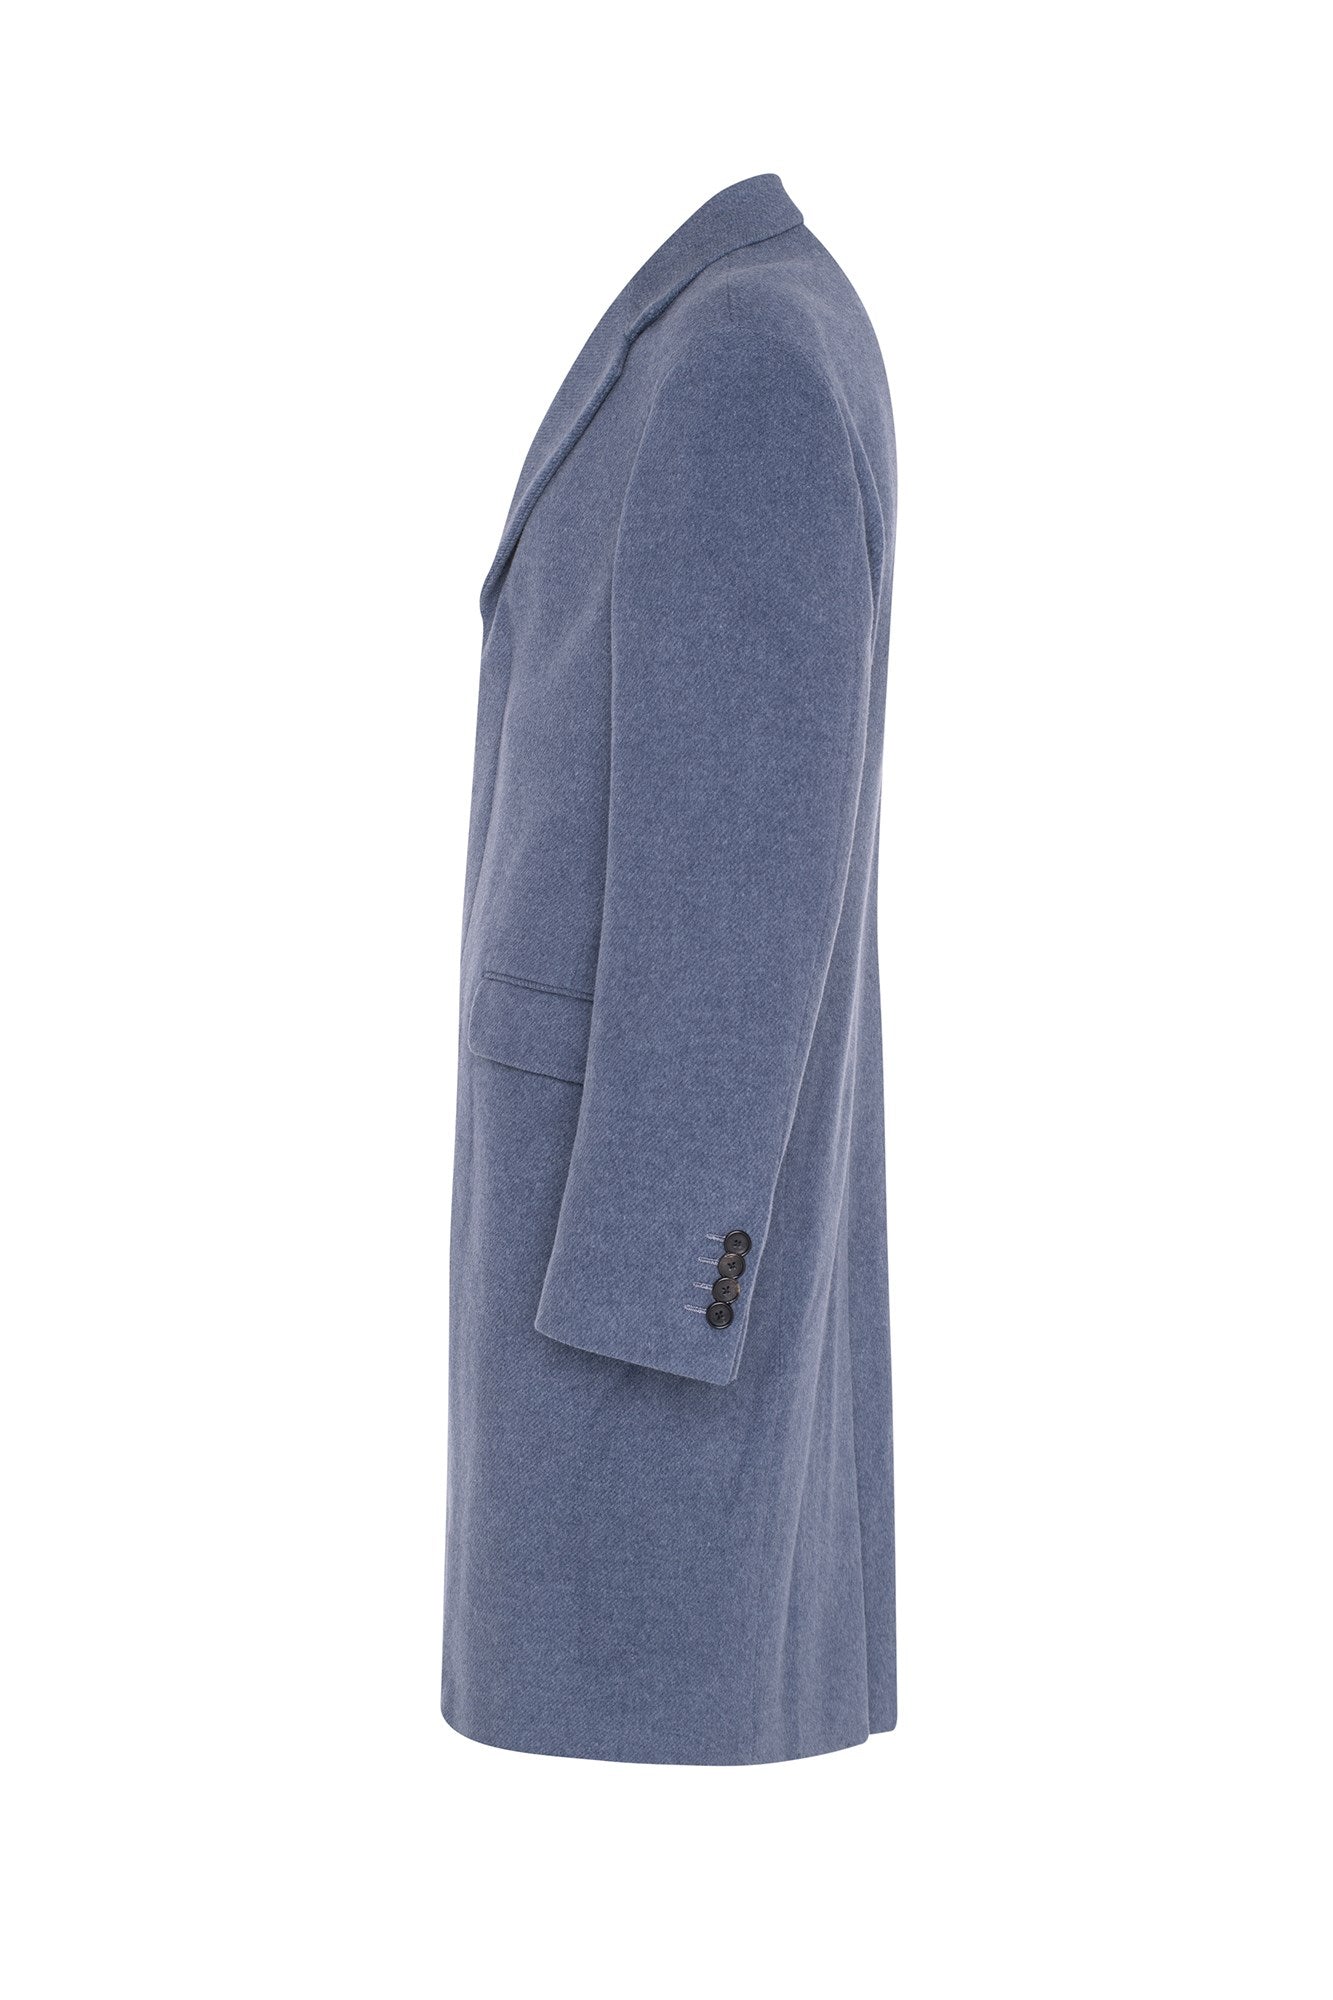 MERCER LIGHT BLUE OVERCOAT - MENS - Cardinal of Canada-CA - Mercer - blue wool blend topcoat 41.5 inch length